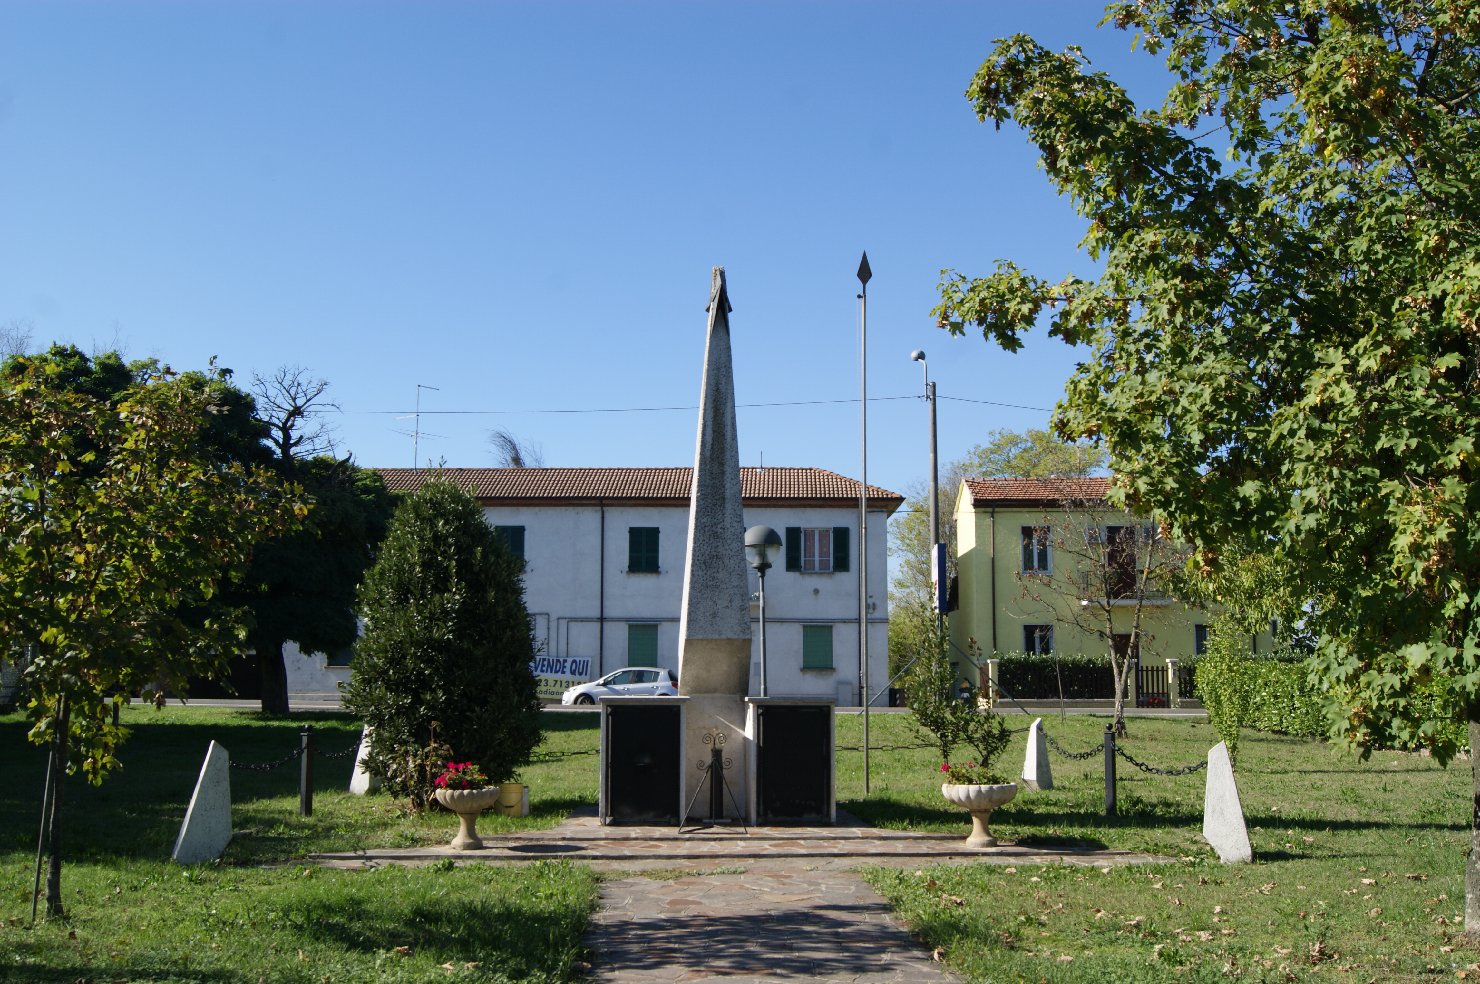 monumento ai caduti - ad obelisco - bottega piacentina (sec. XX)